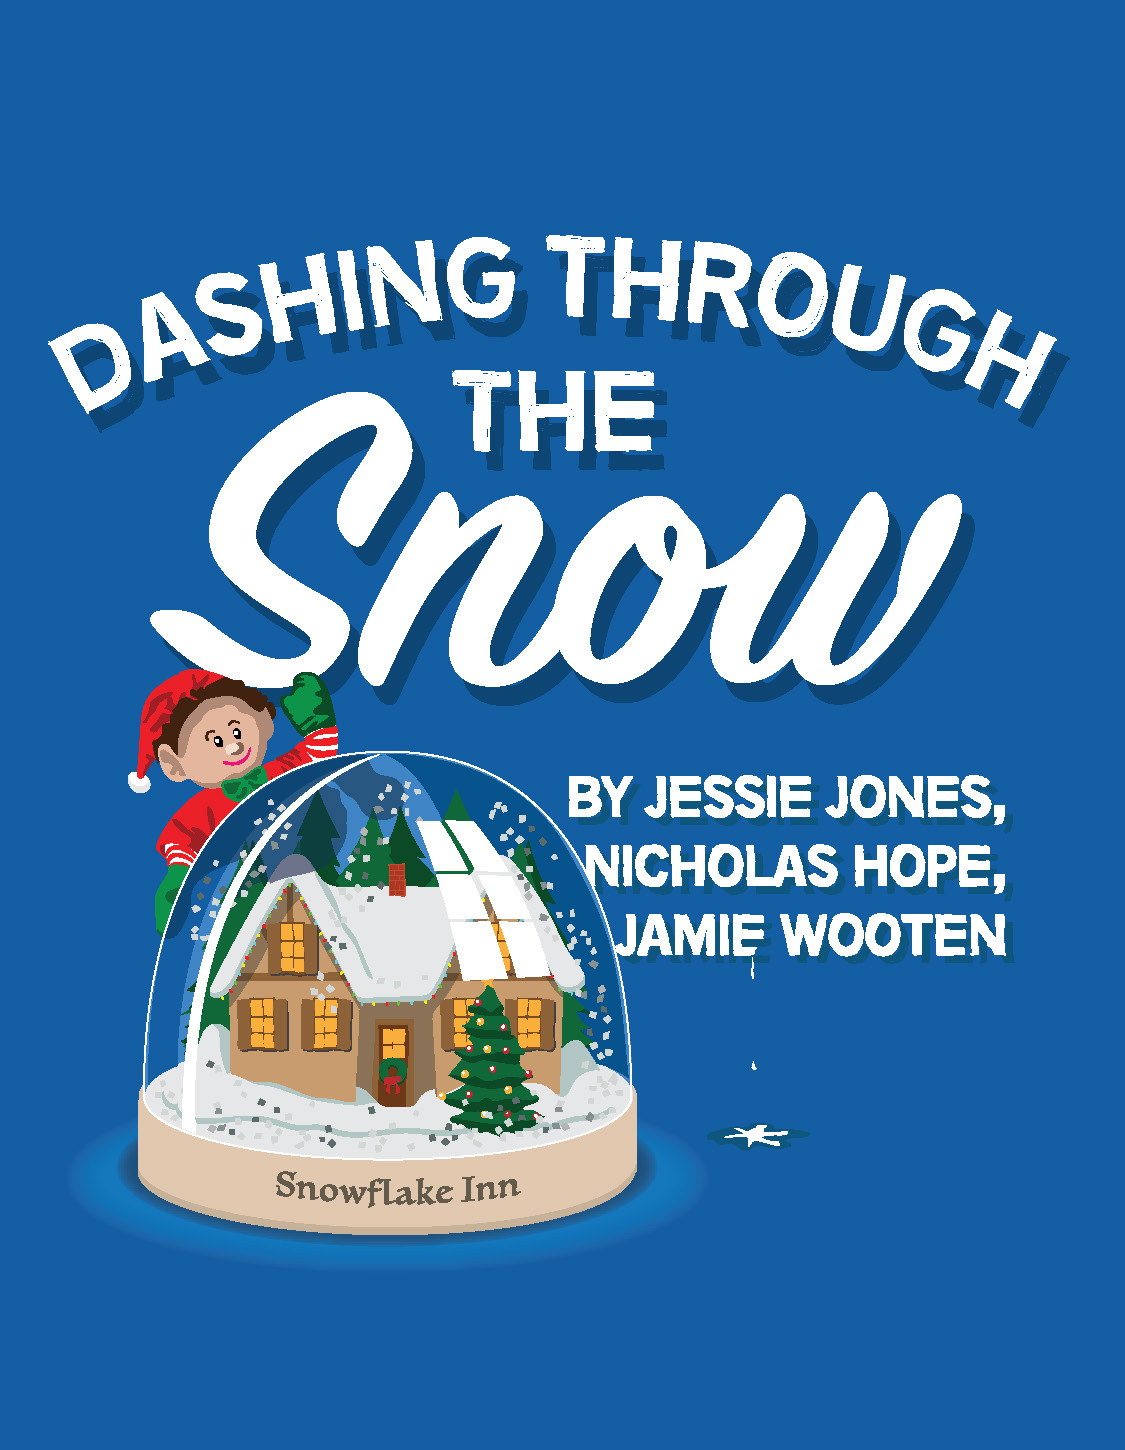 Family friendly laugh-fest “Dashing Through the Snow” opens Nov. 27